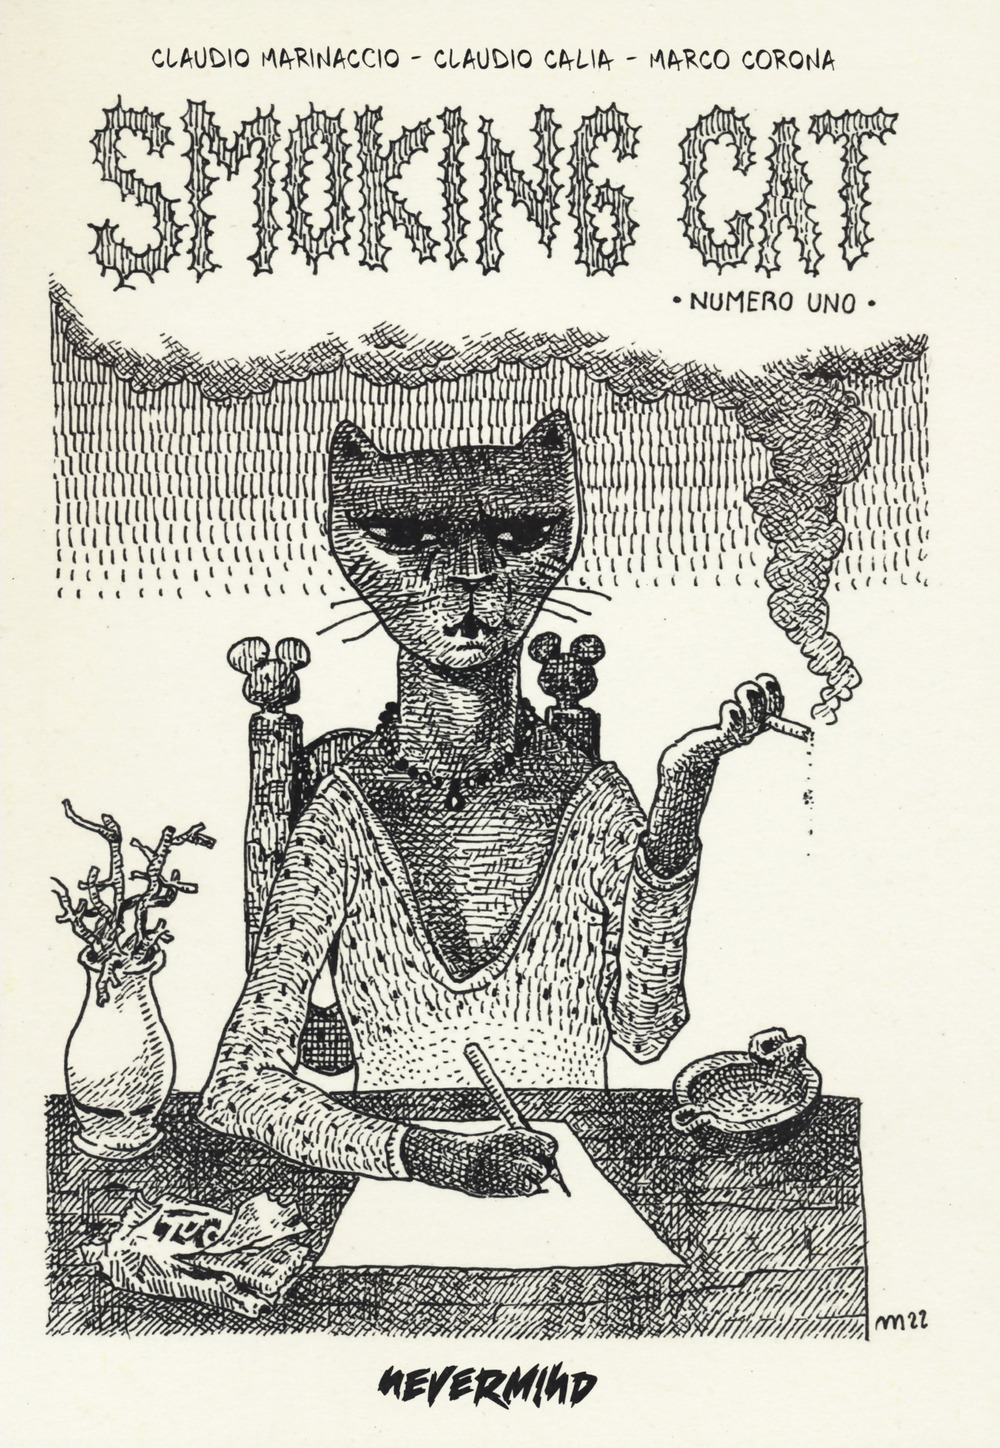 Smoking cat. Vol. 1